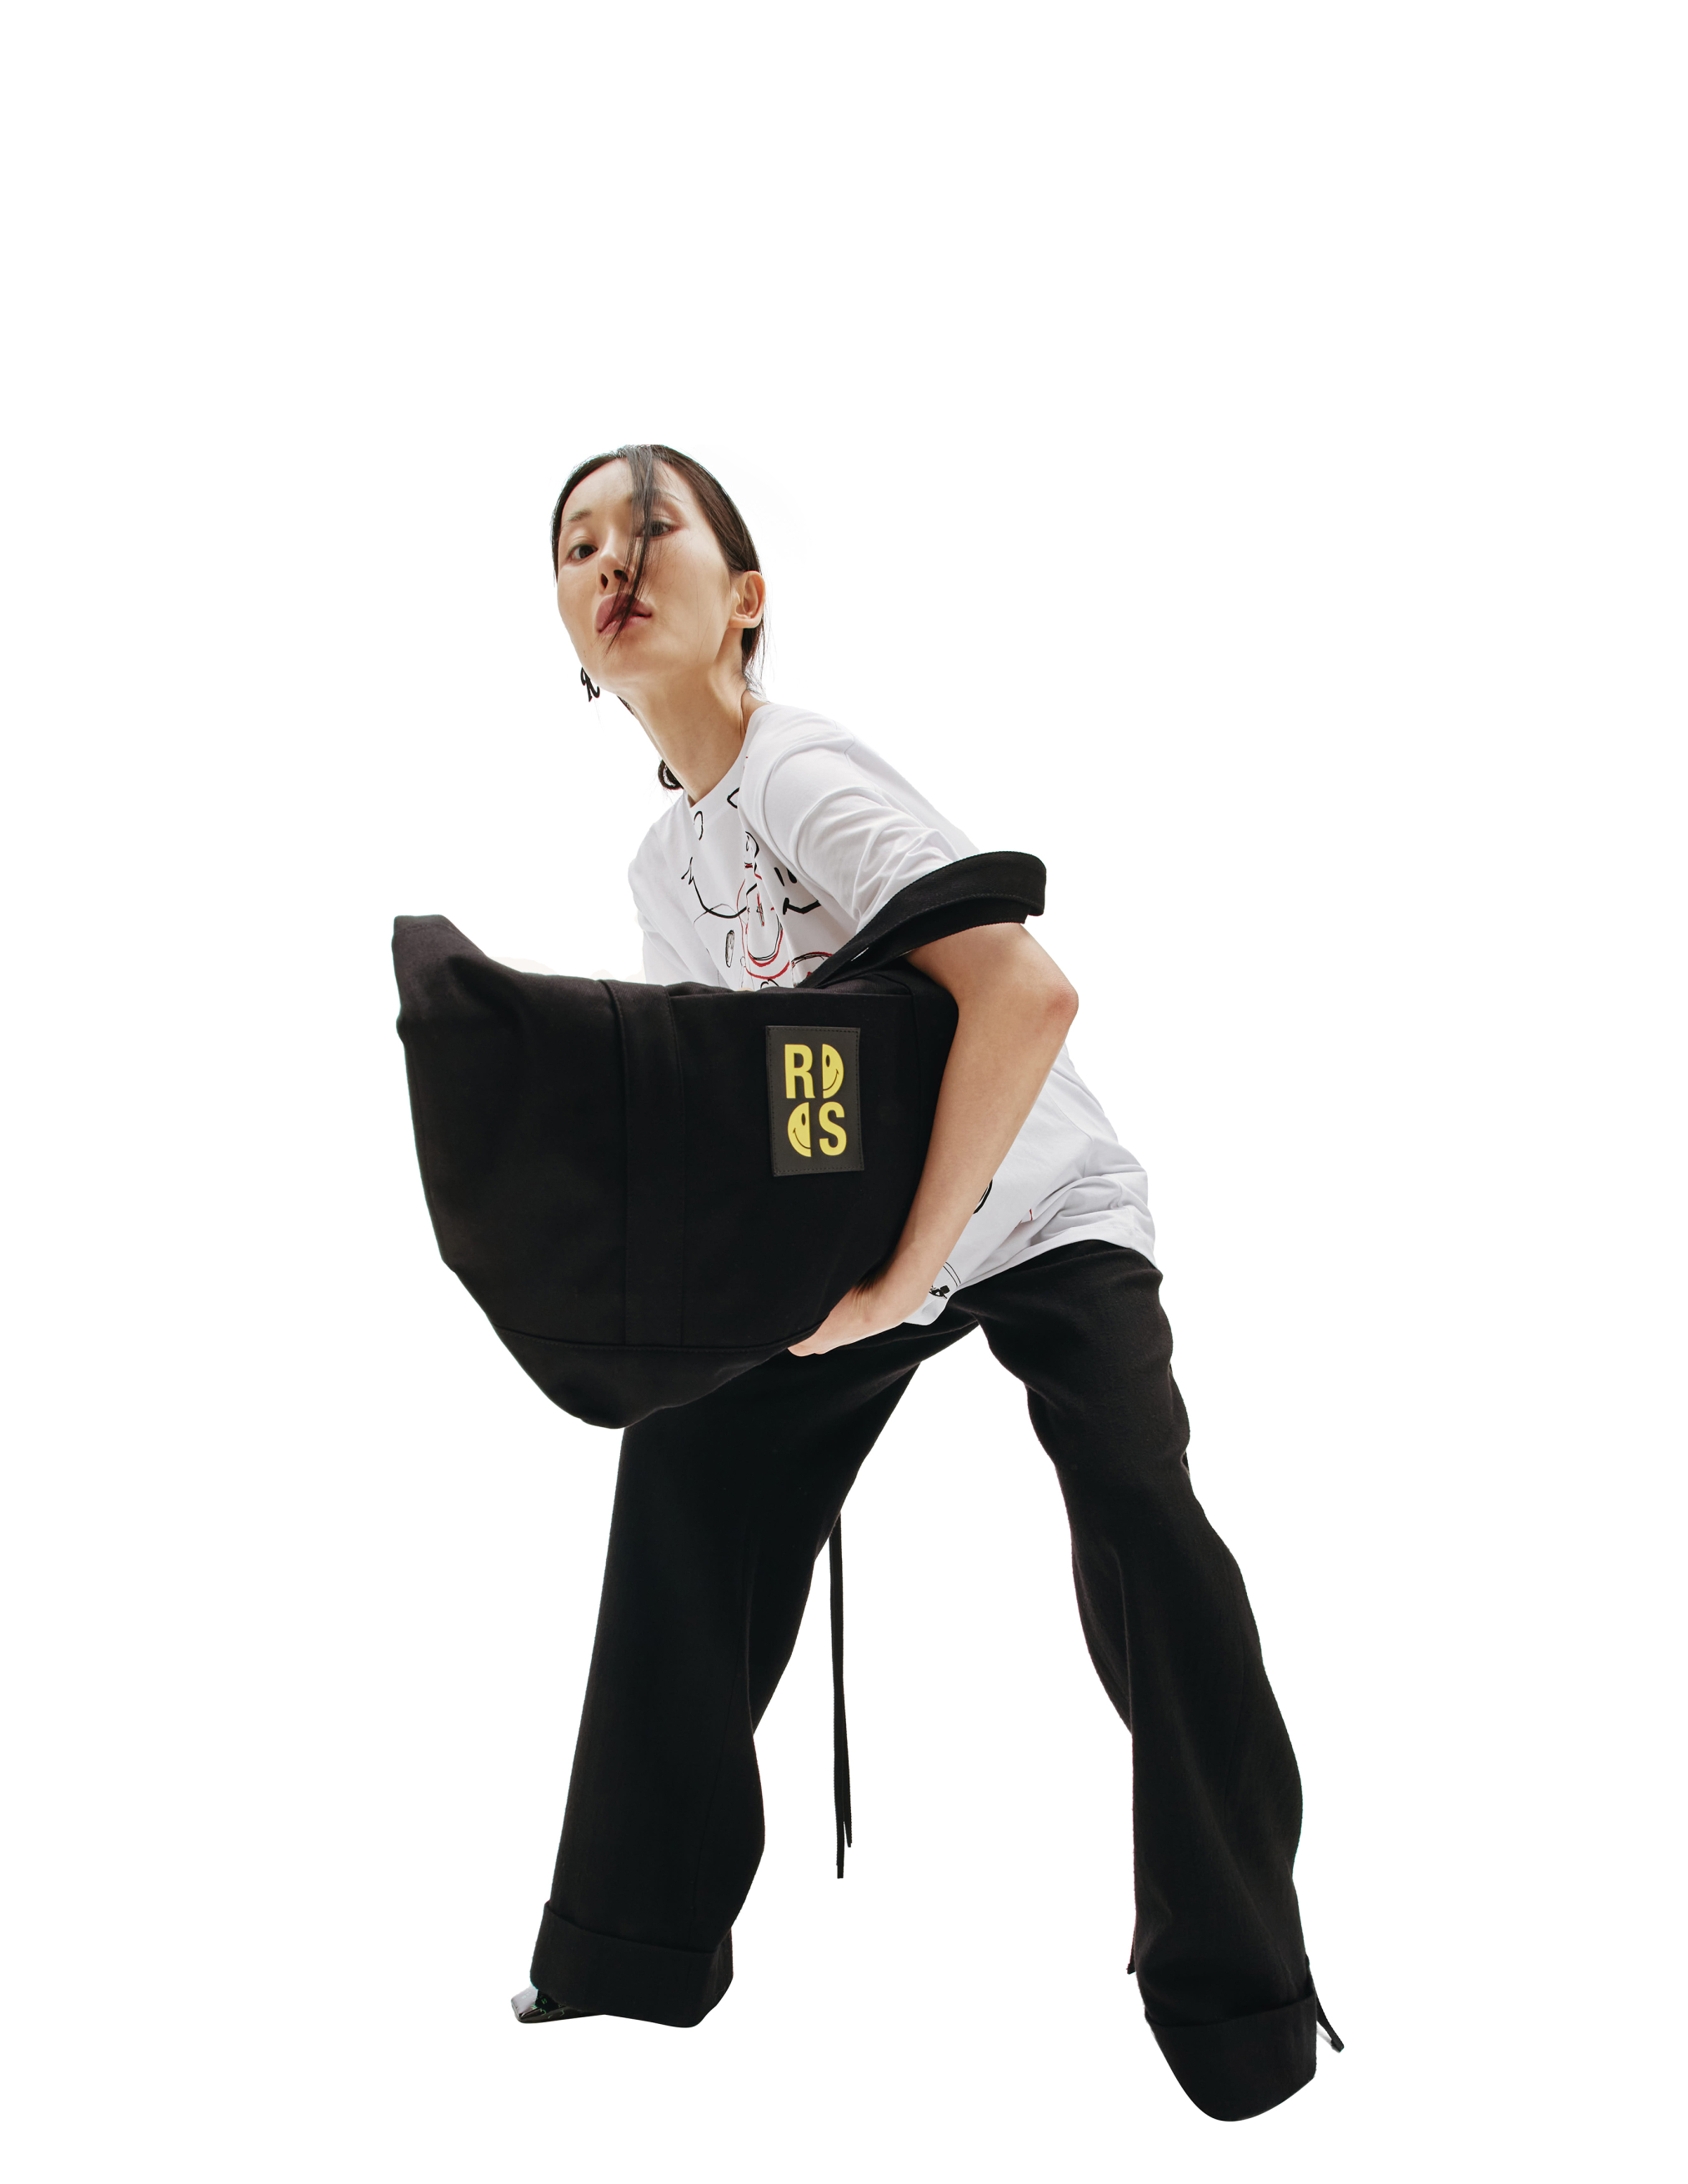 Джинсовая сумка-шоппер Raf Simons x Smiley с патчем Raf Simons 224-935-11000-0099, размер One Size - фото 6